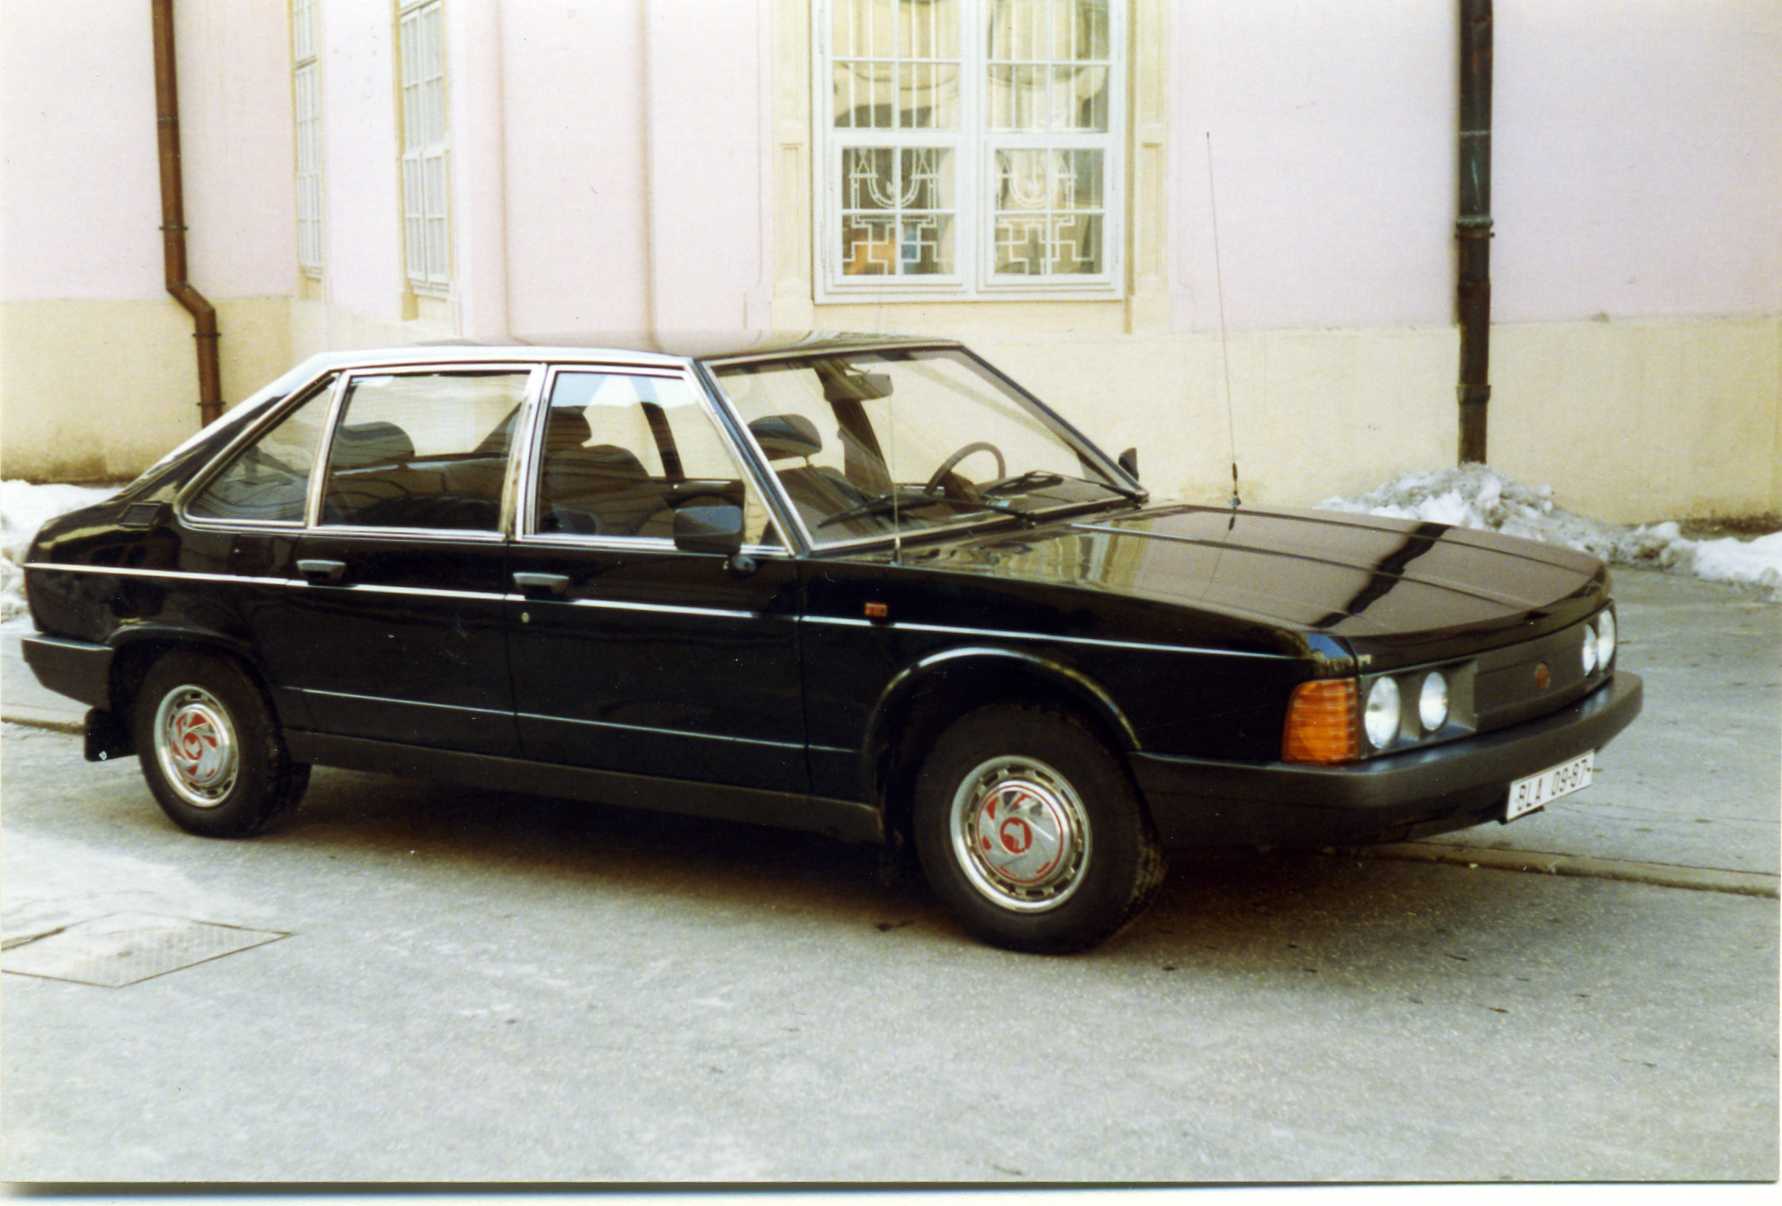 File:Tatra 613 Bratislava. March 1993.jpg - Wikimedia Commons